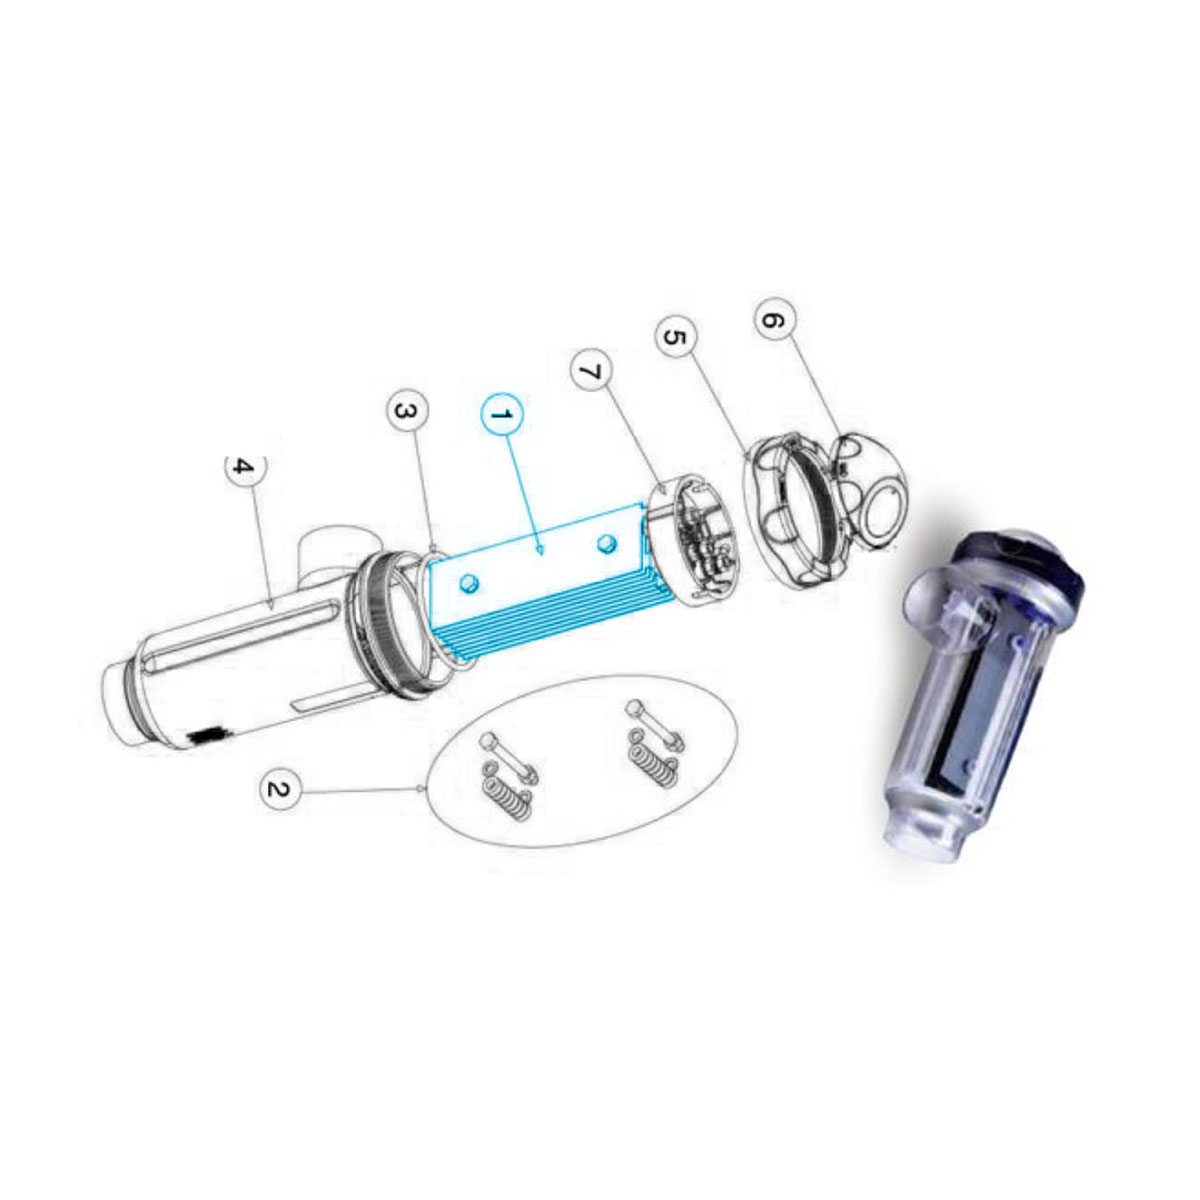 Tube for dosing pump for Smart salt electrolysis system Tube for dosing pump for Smart salt electrolysis system